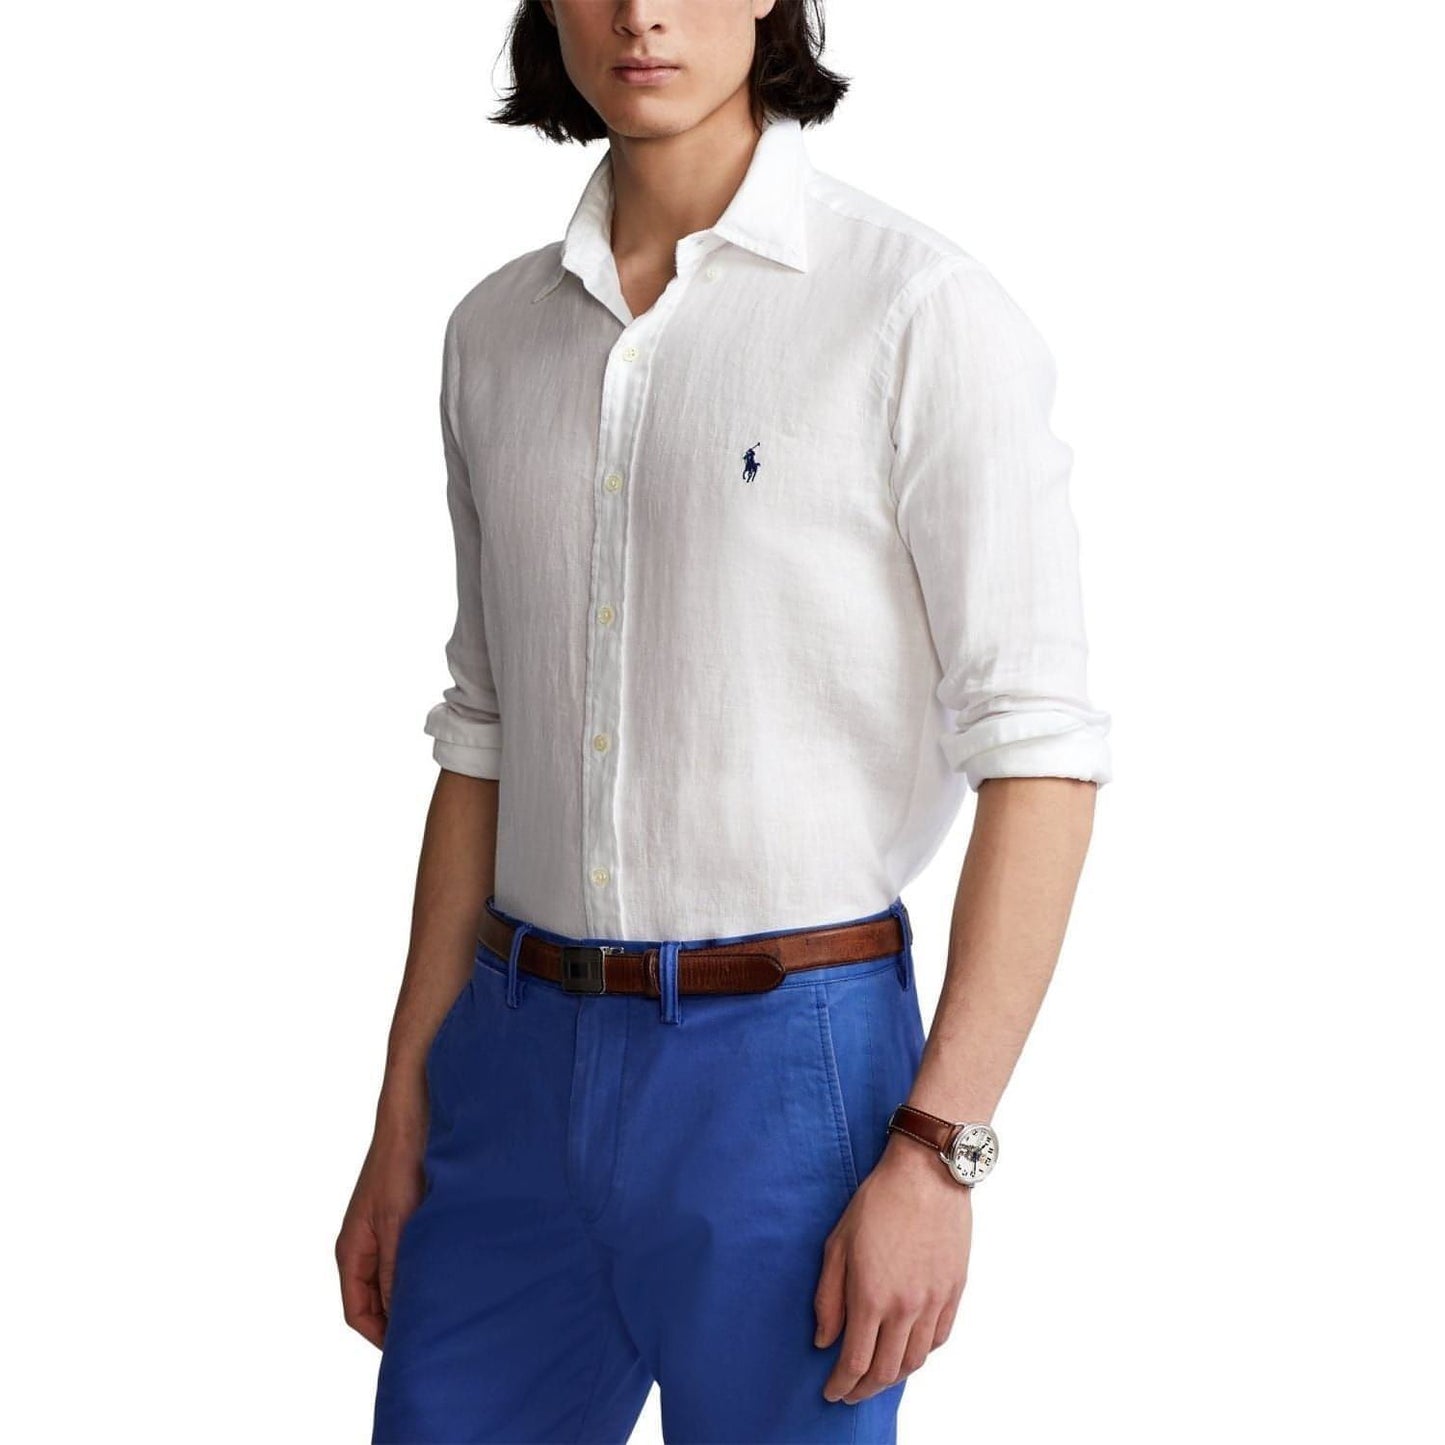 POLO RALPH LAUREN vyriški balti marškiniai ilgomis rankovėmis Long sleeve sport shirt